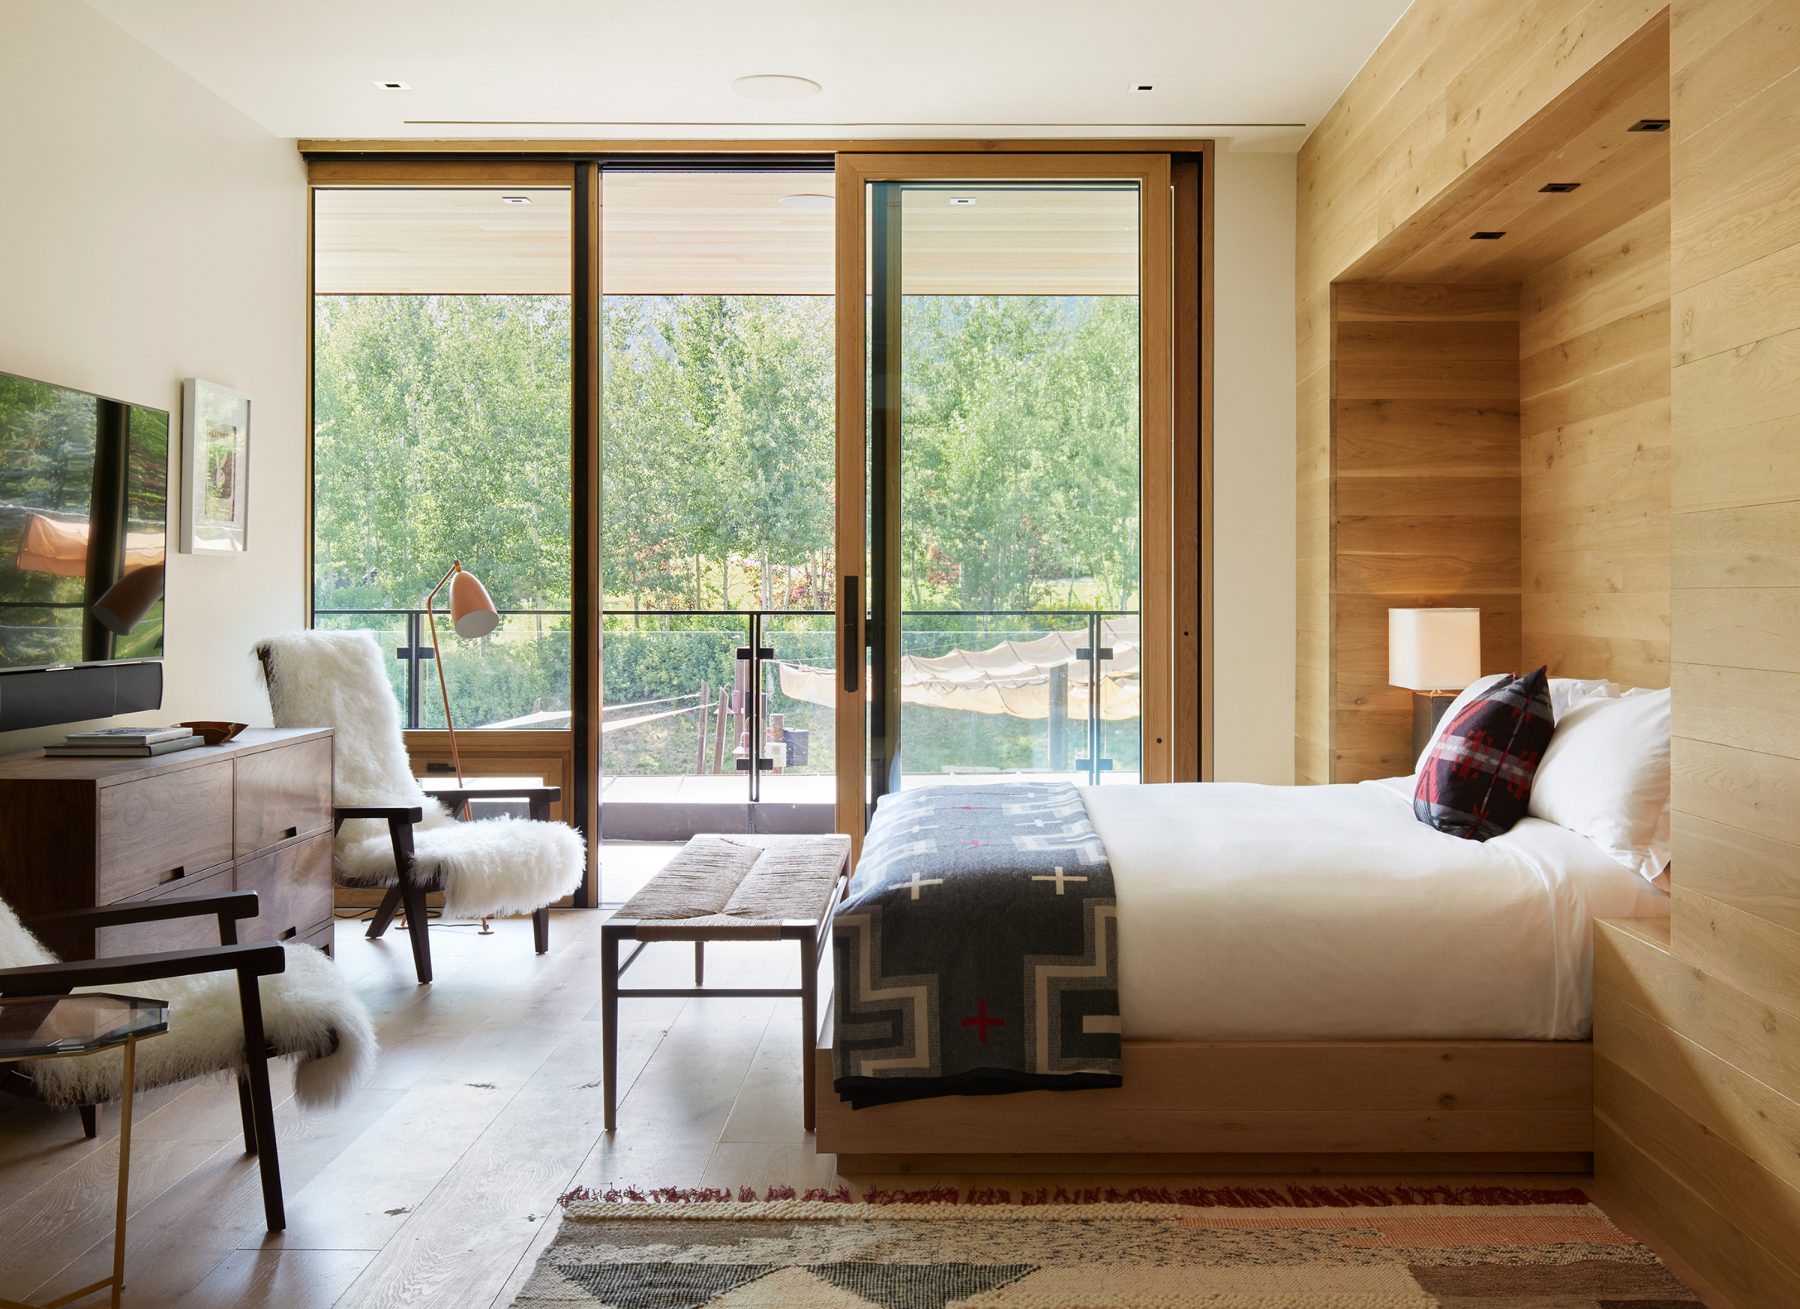 Aira Suite - Overview of Bedroom